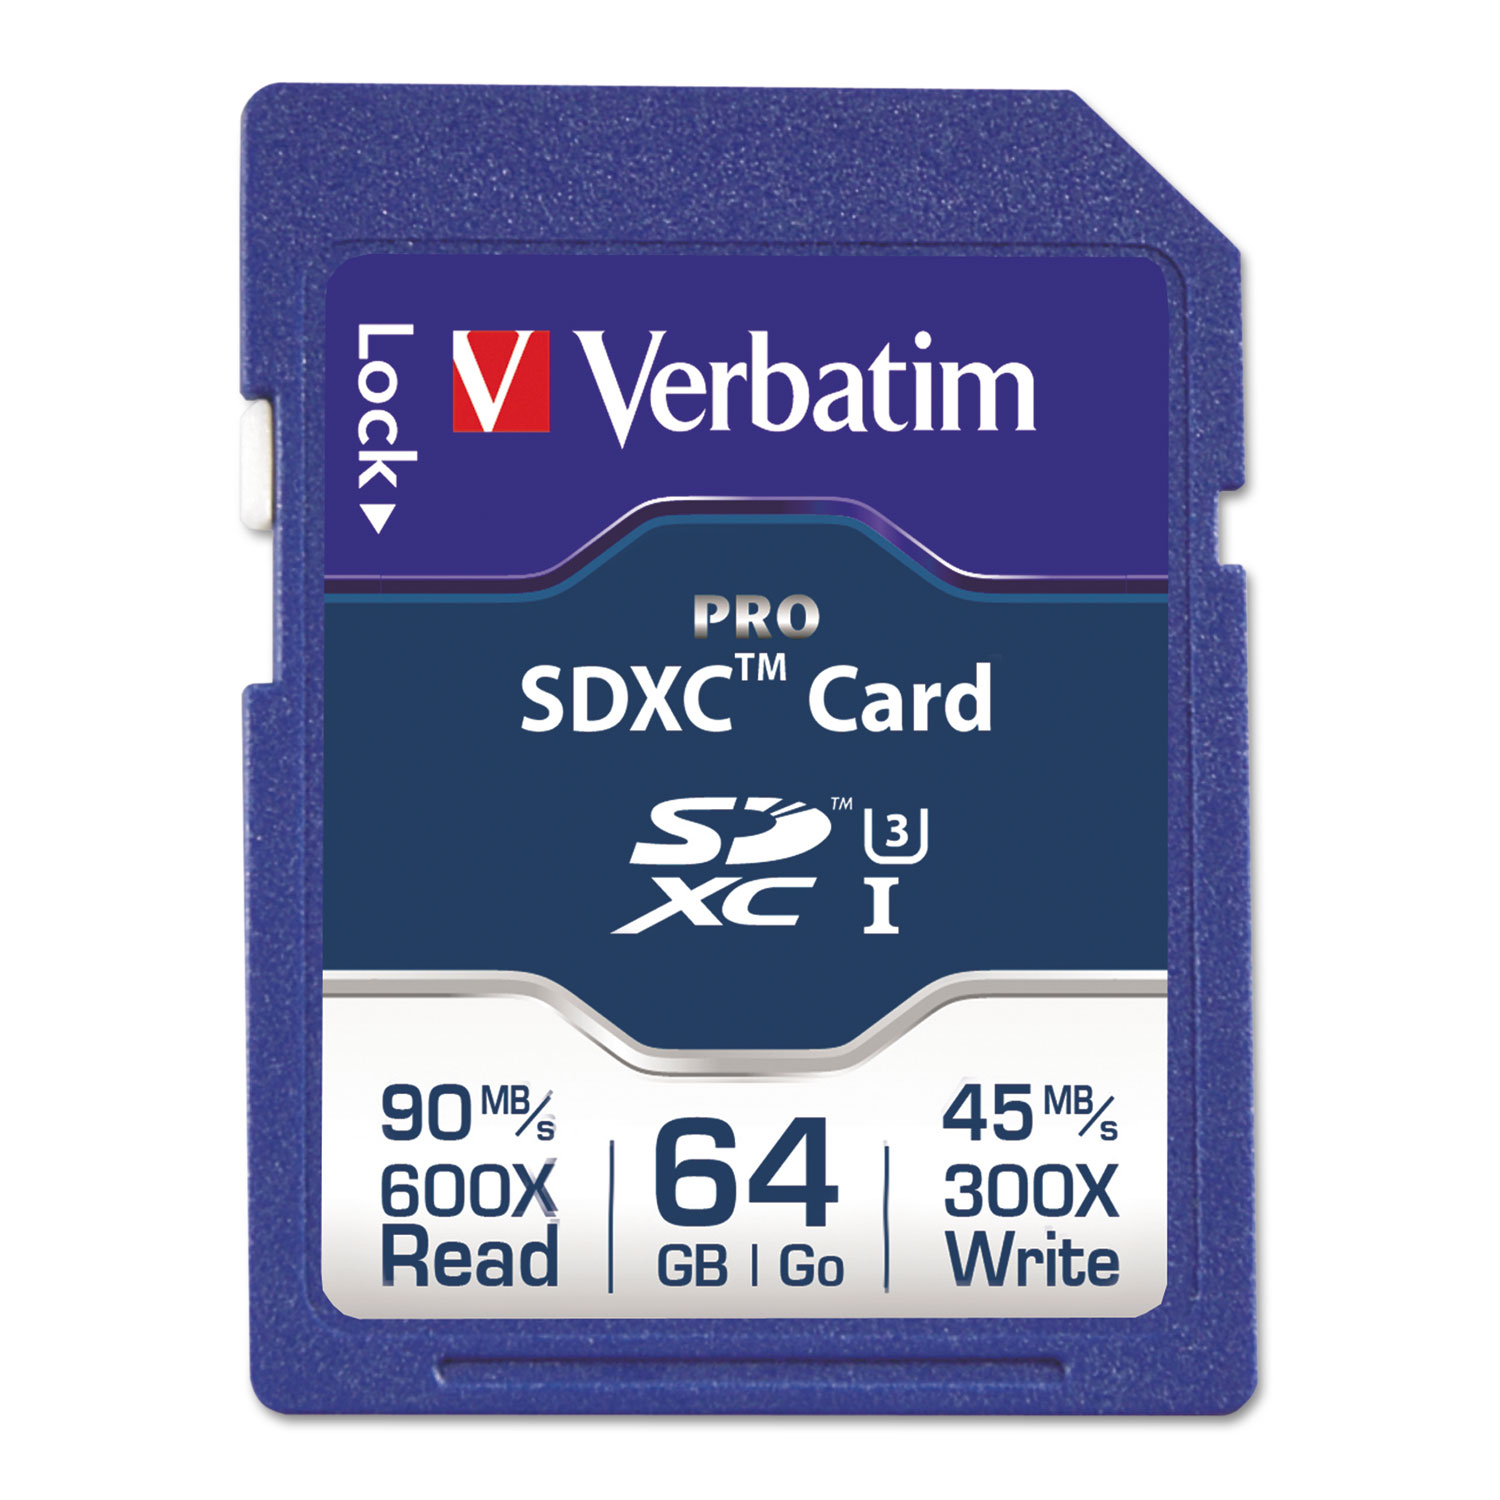 SDXC Memory Card, Class 10 UHS-1, 64GB, 600X Transfer Speed